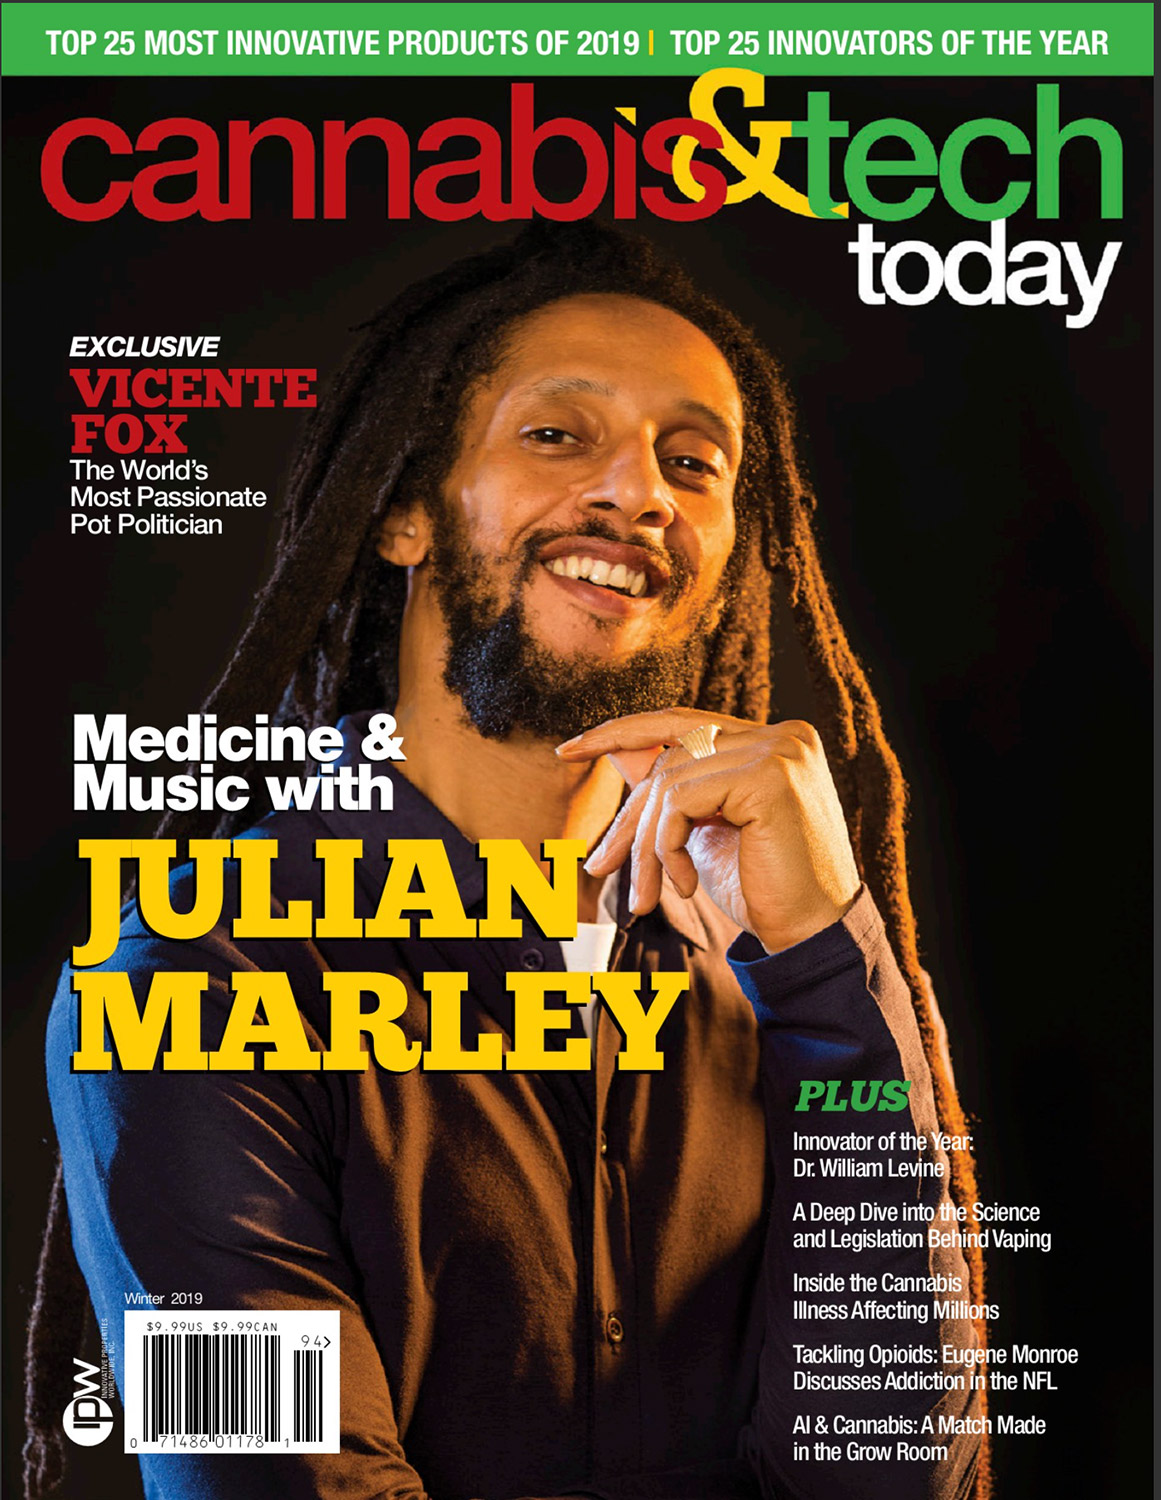 Cannabis & tech today - Julian Marley